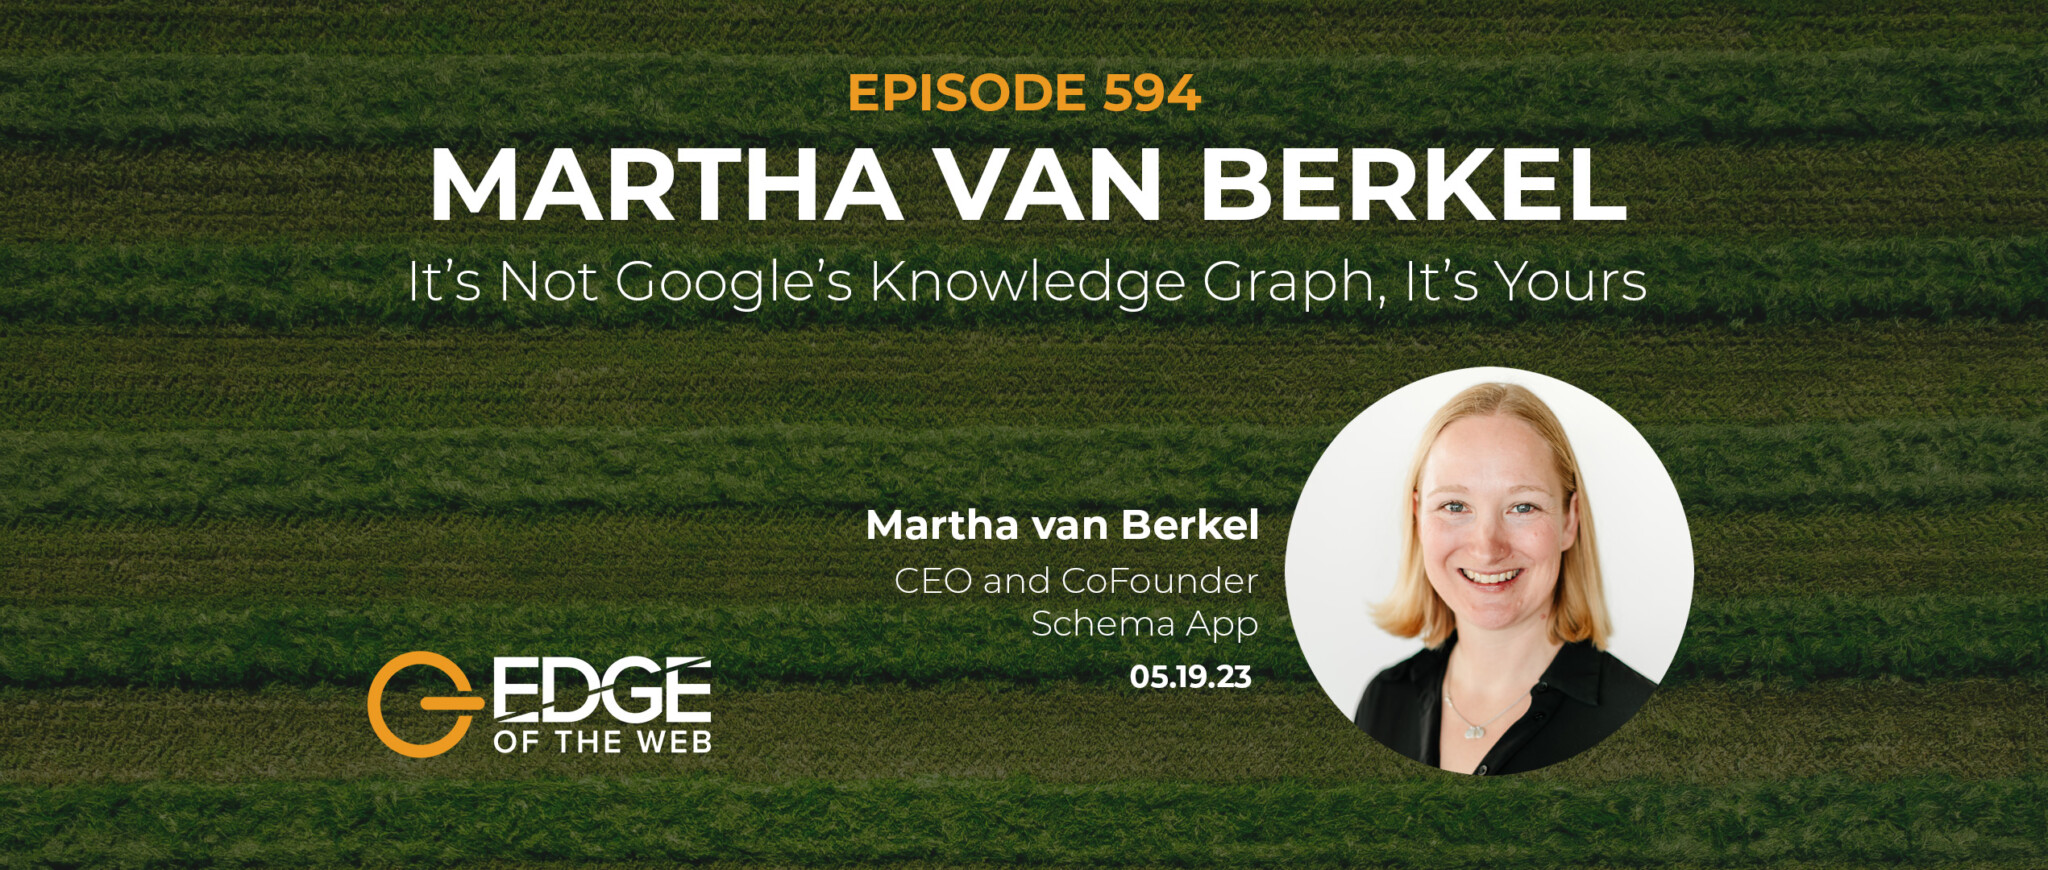 Martha van Berkel EDGE Episode 594 Featured Image